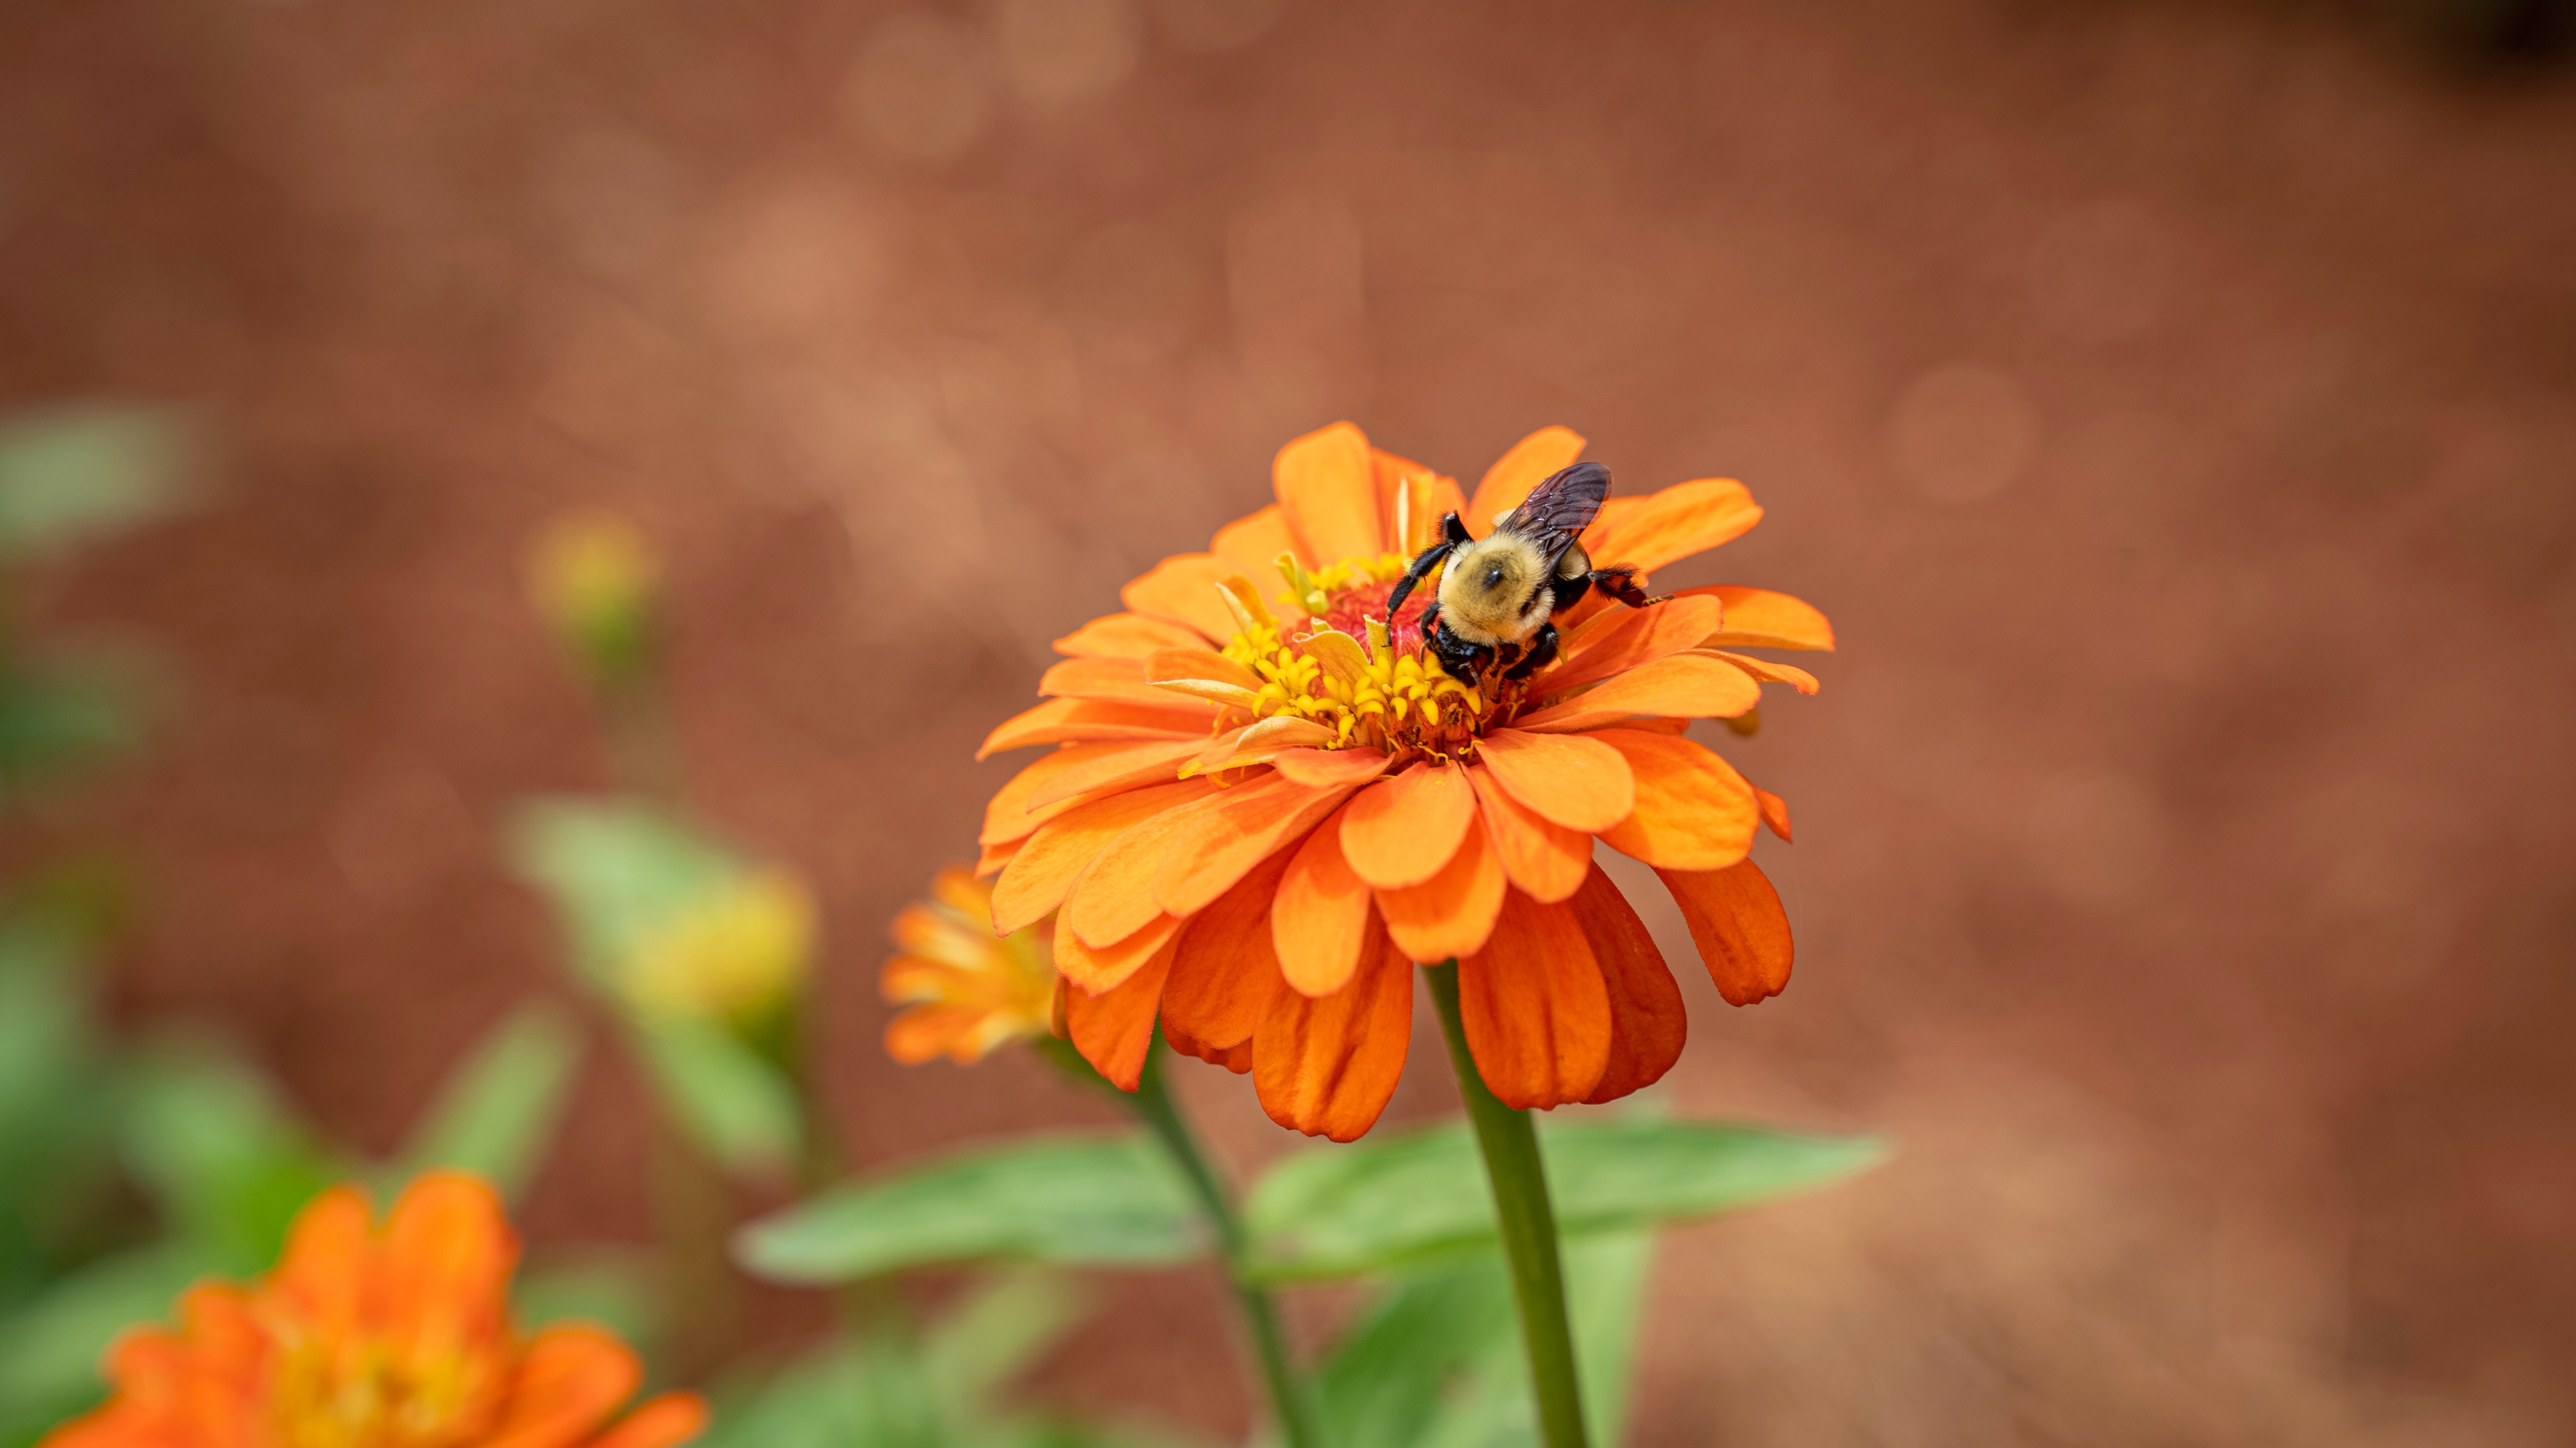 HoneyBee on Flower 